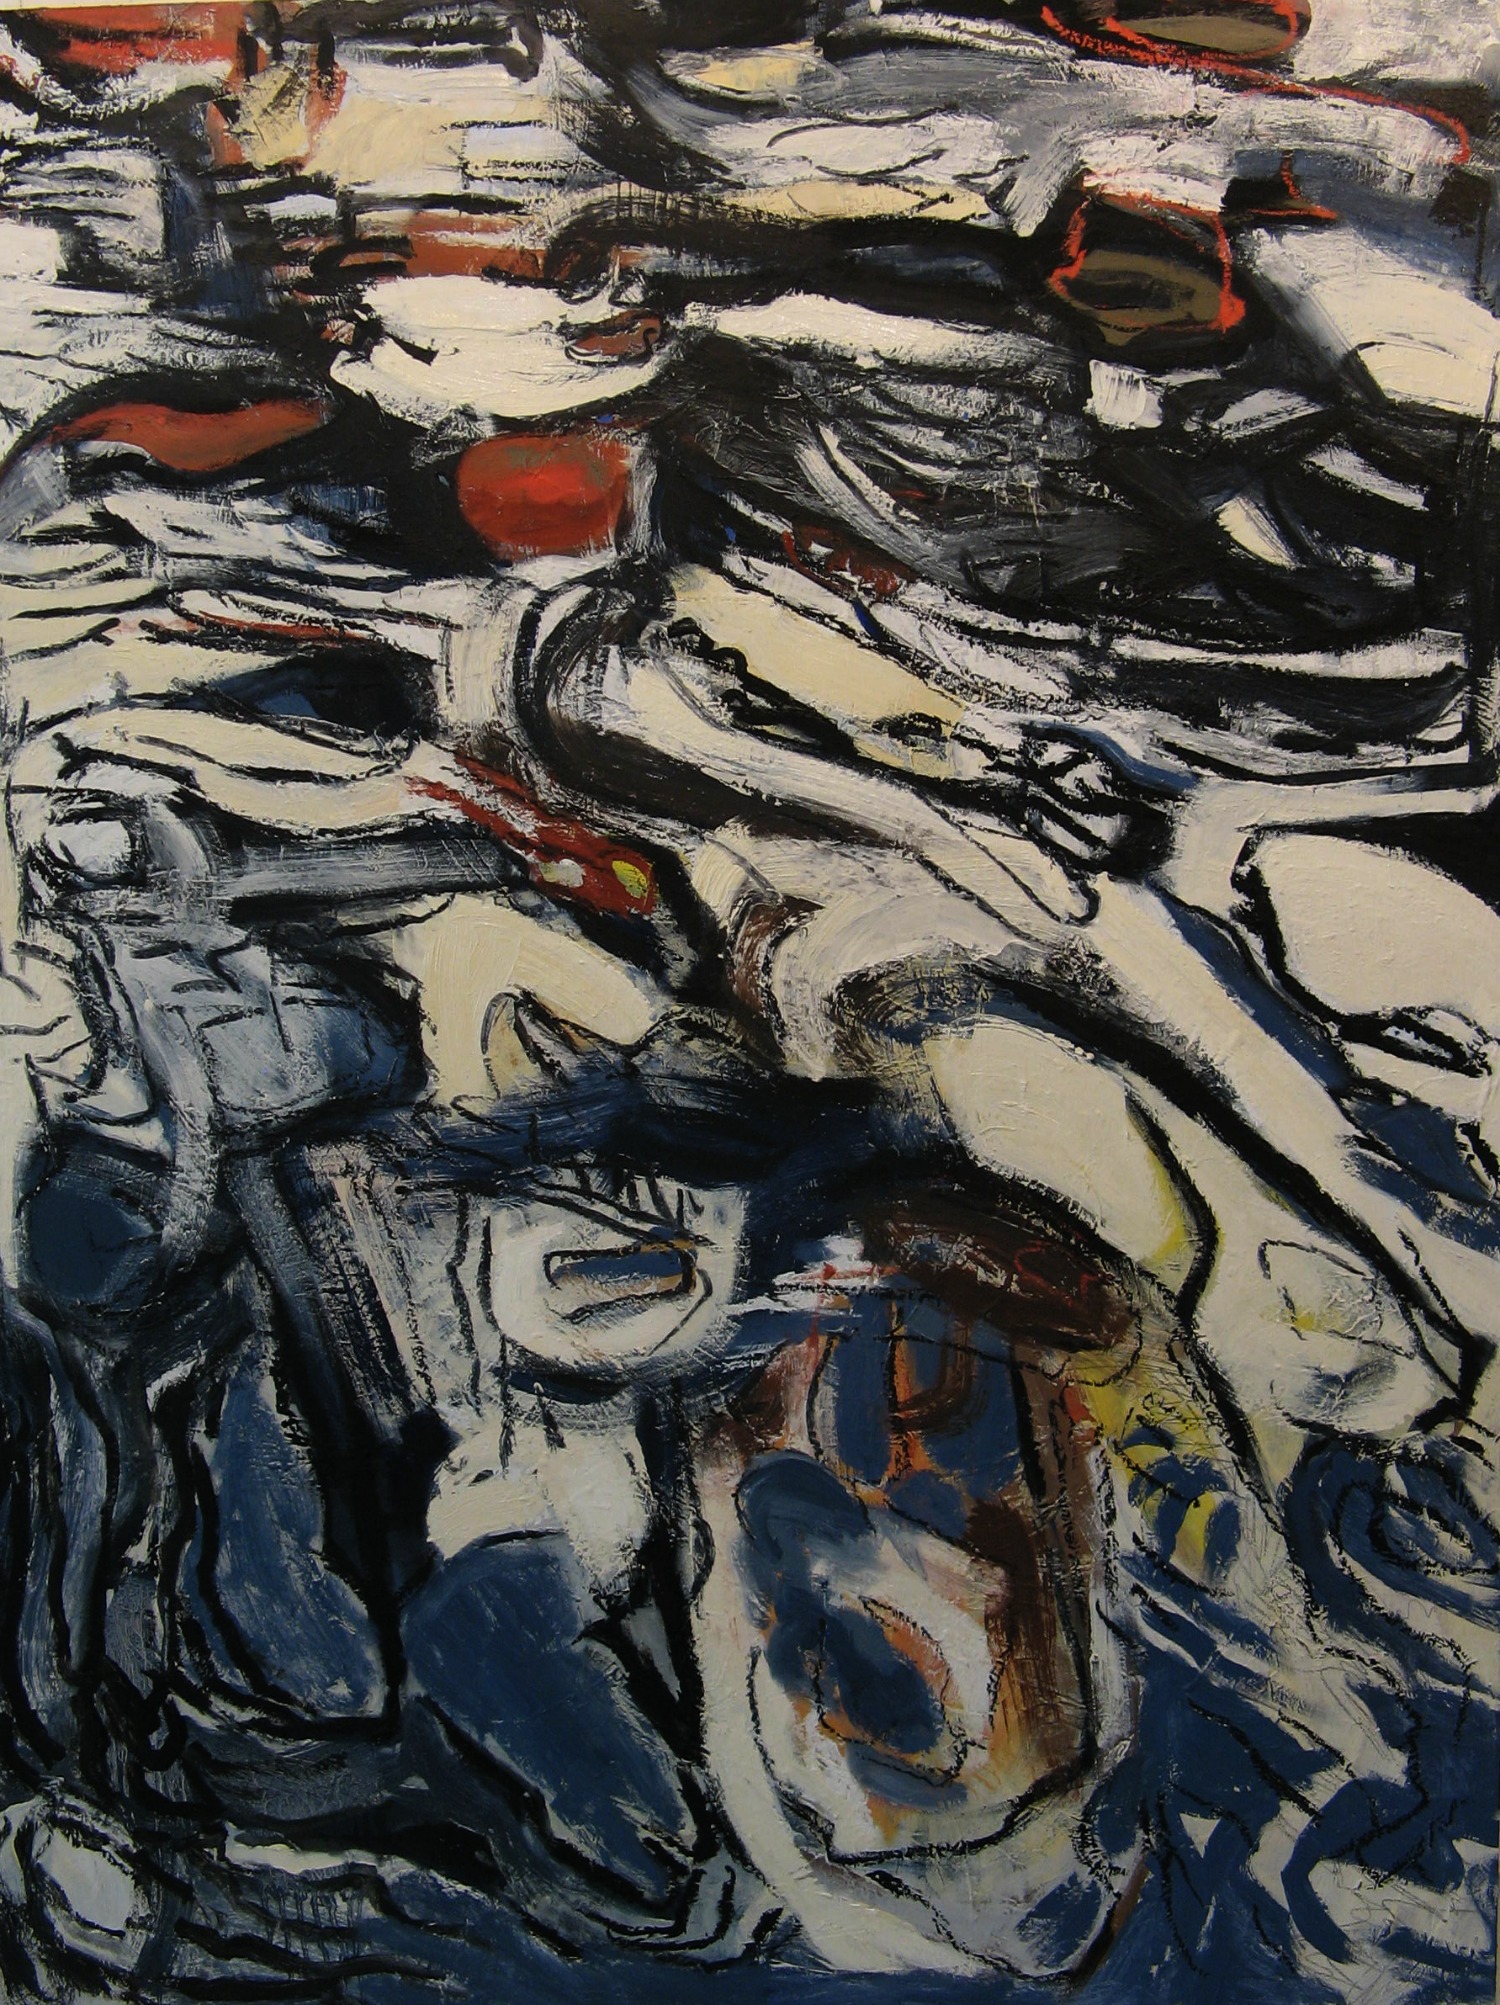  Osterman,  Drift , Oil on canvas, 56x42 